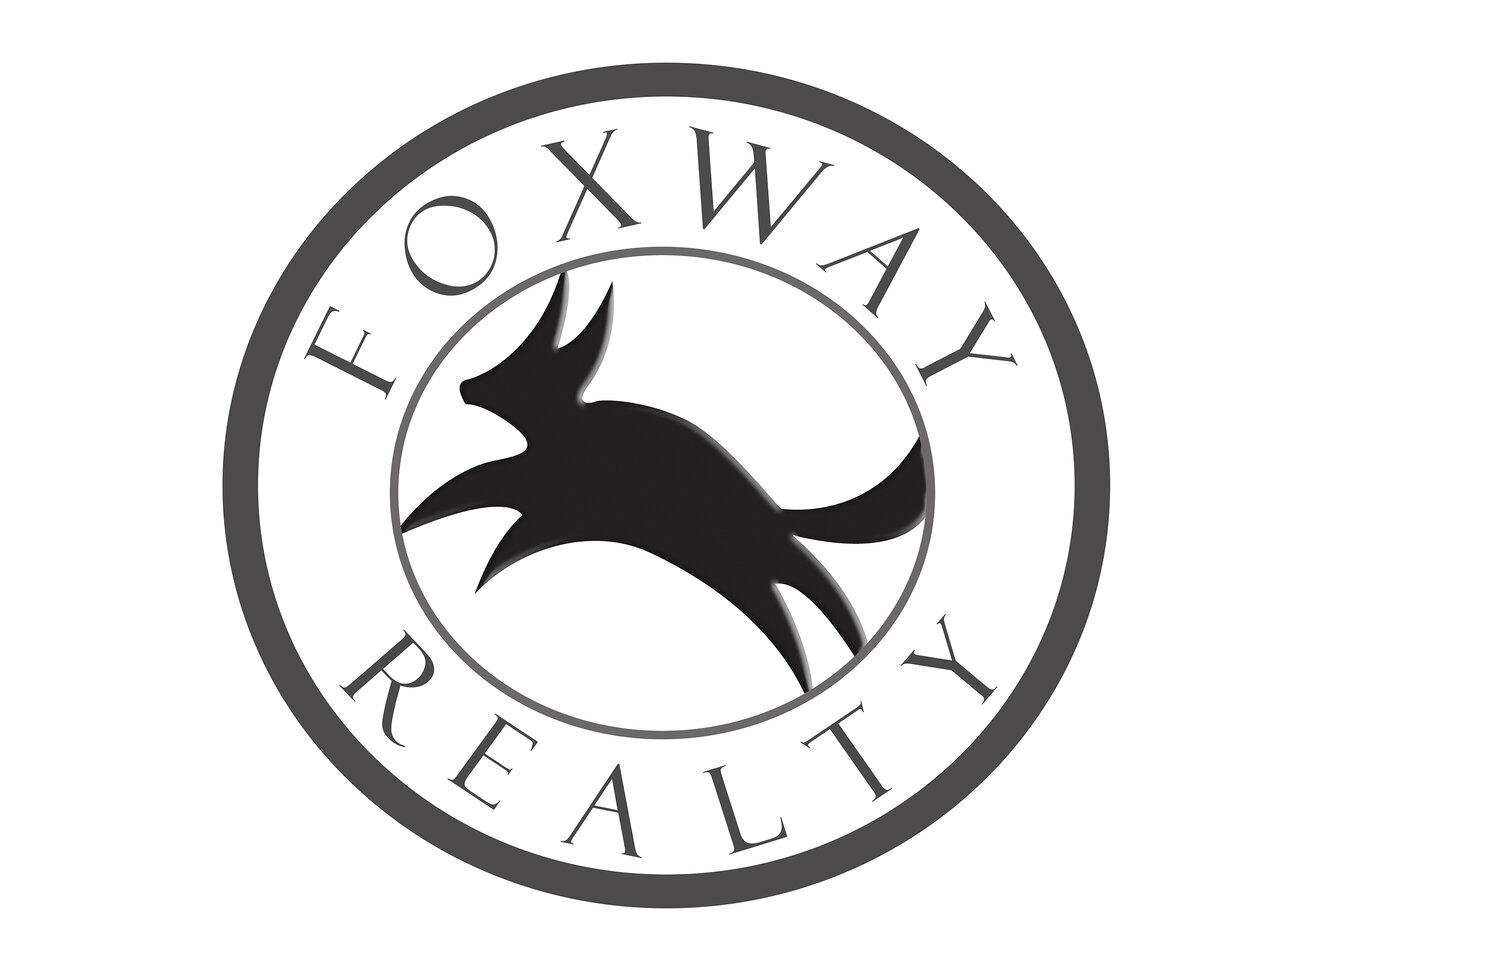 Foxway Realty 